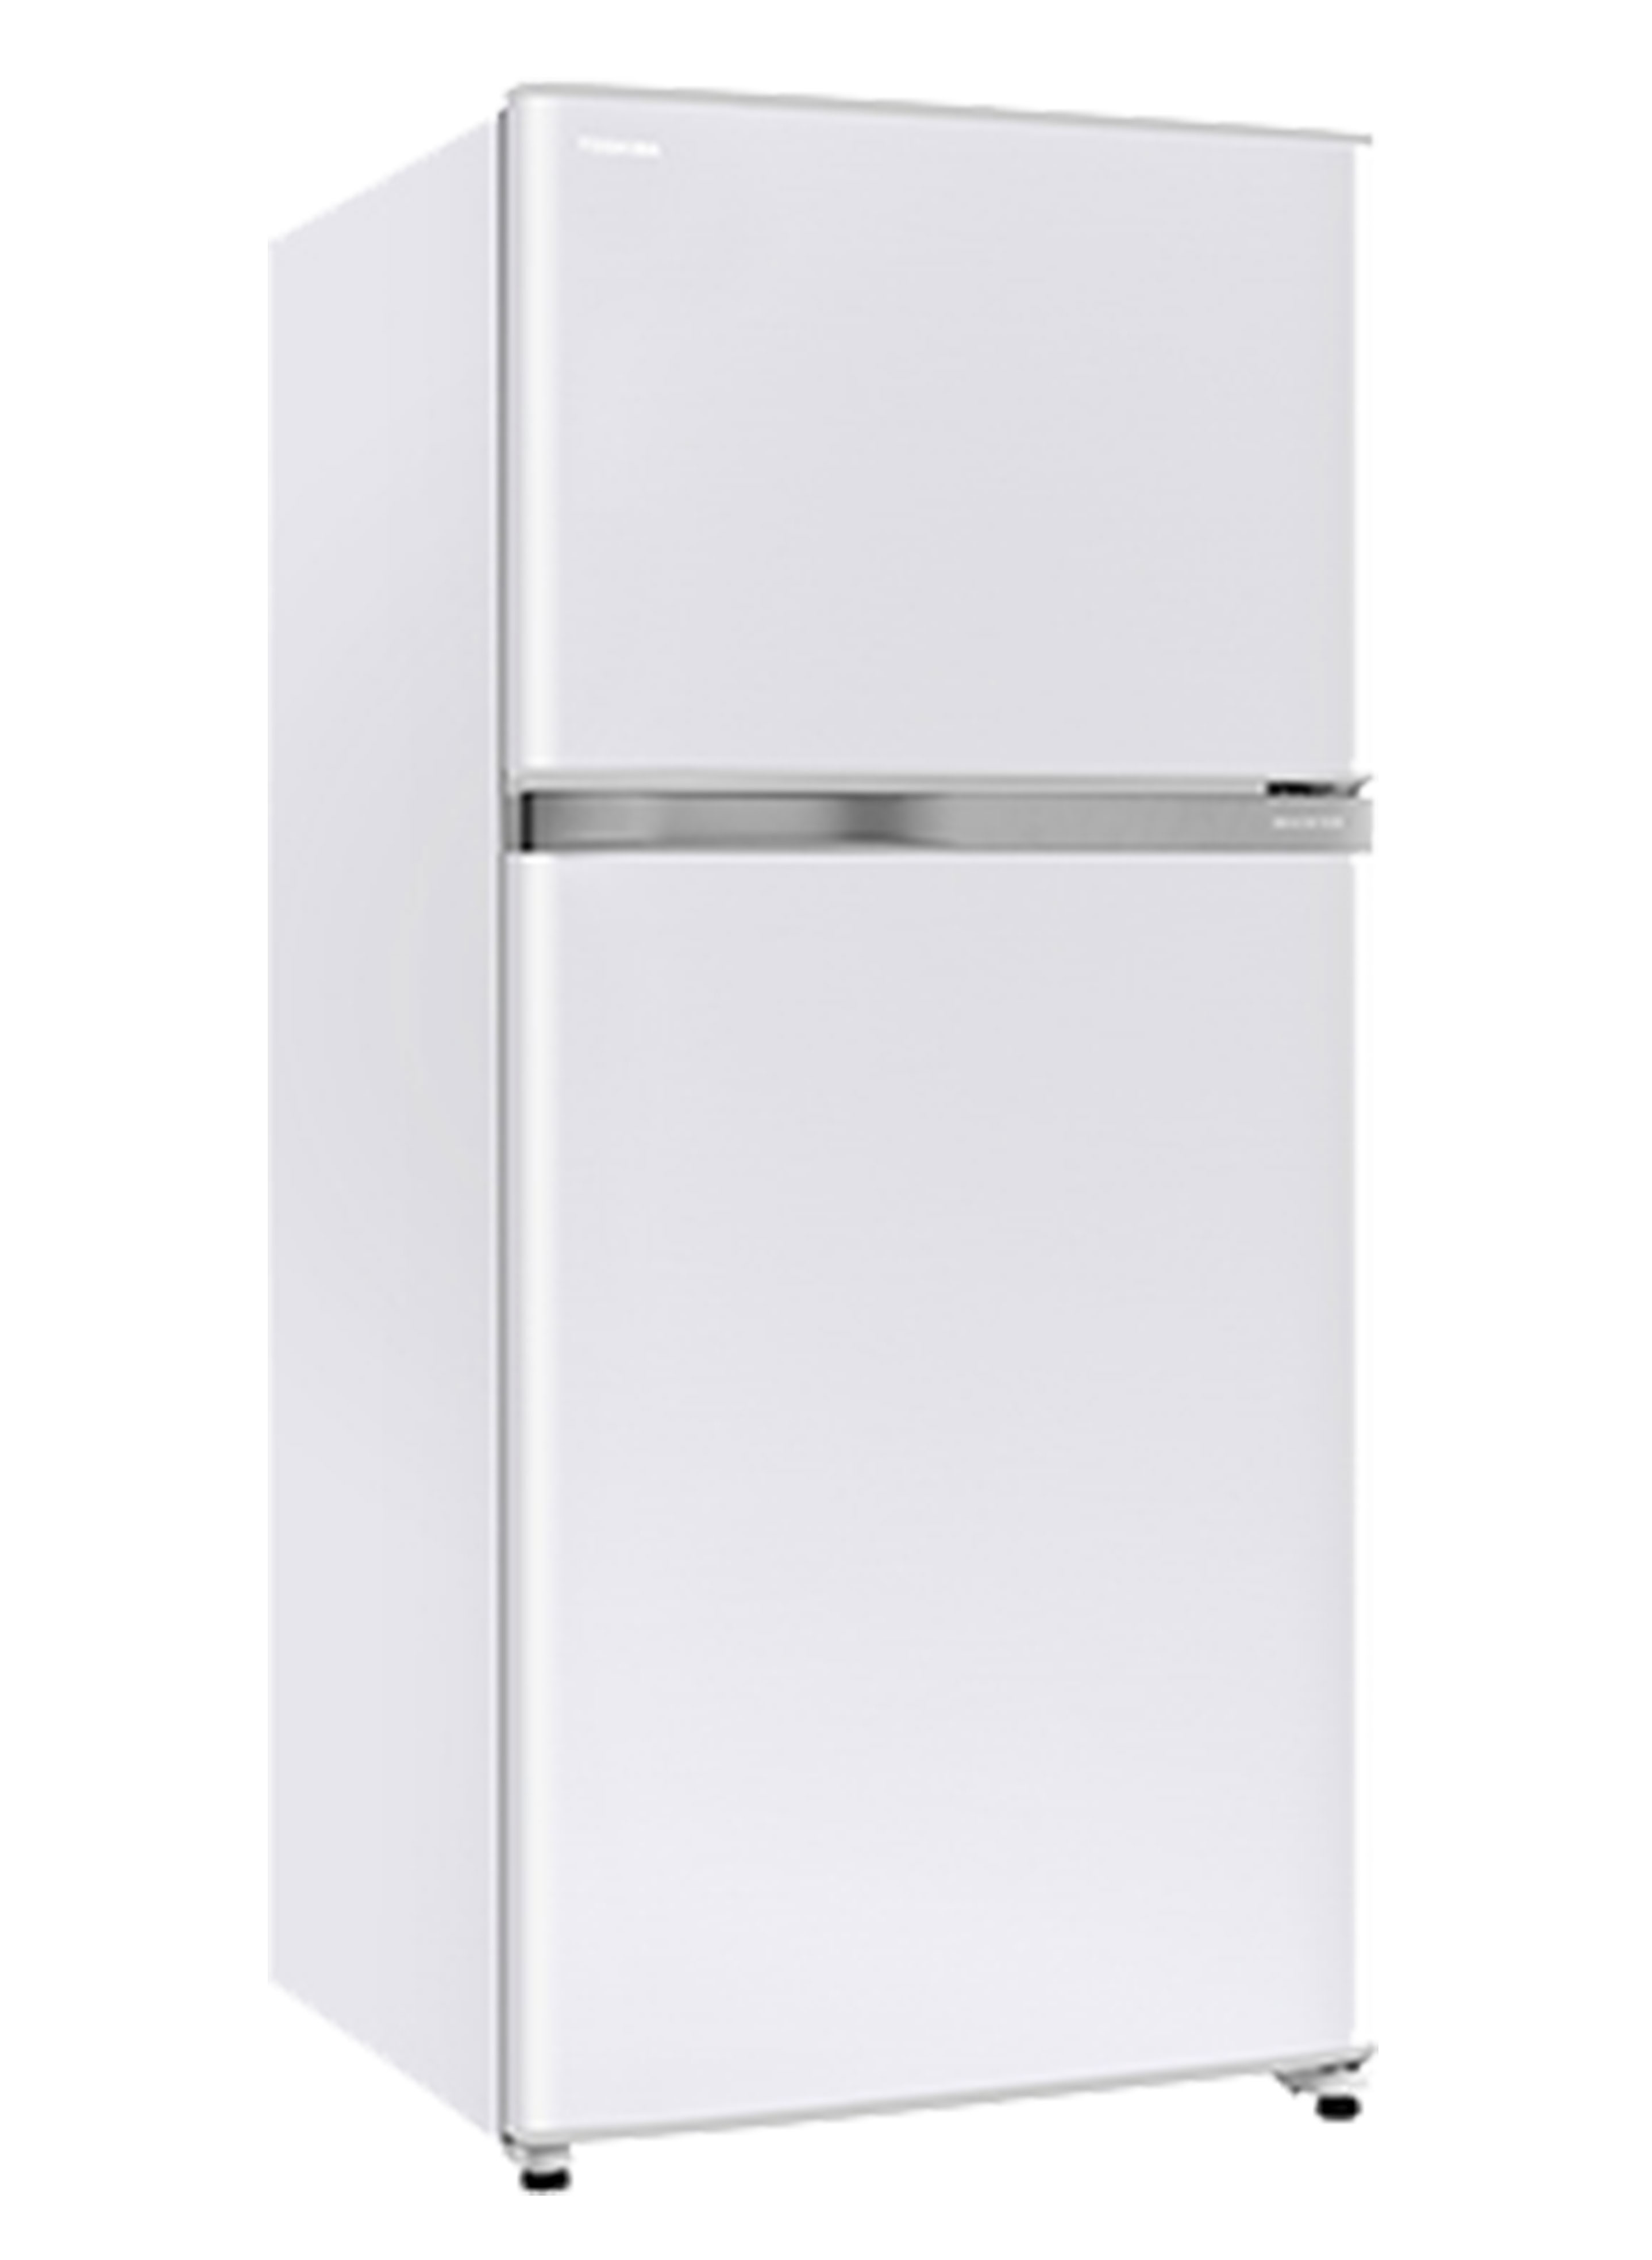 Refrigerator White Side View